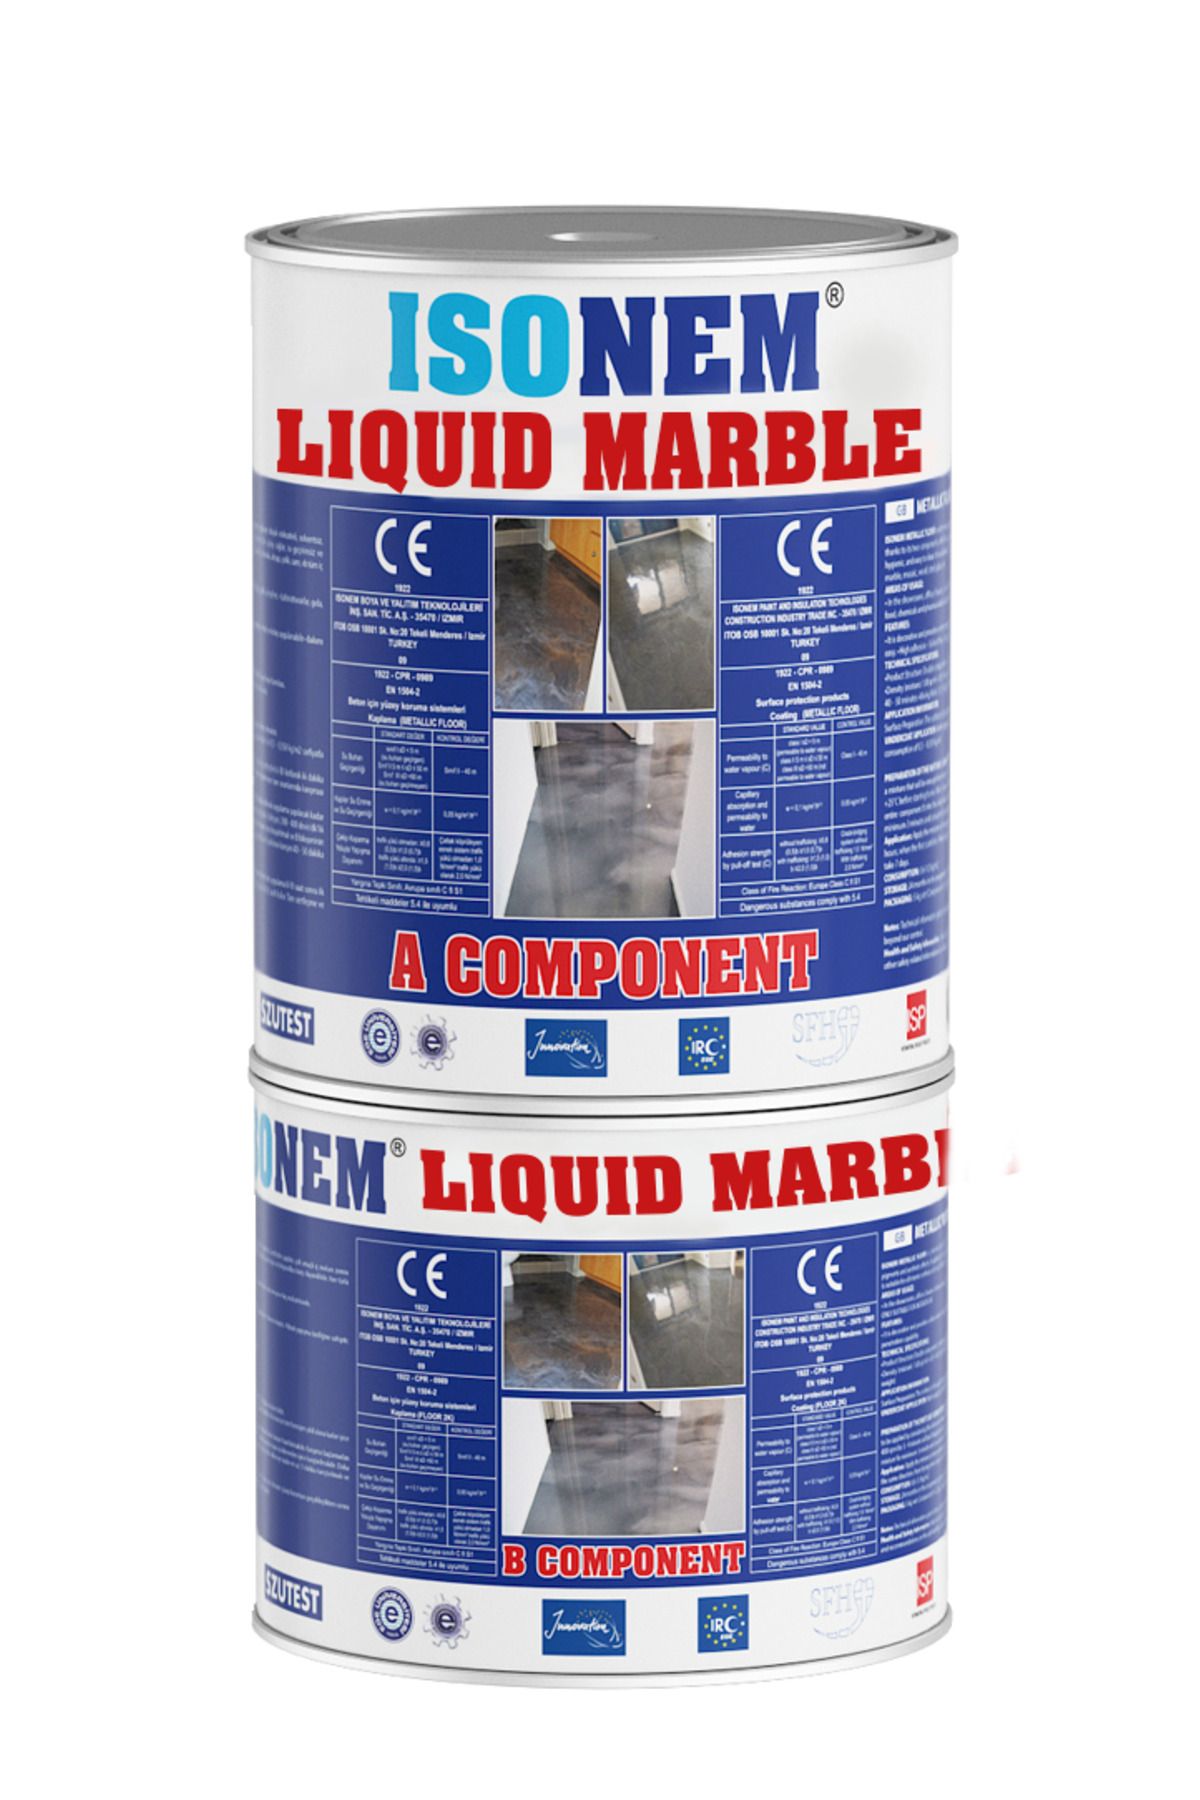 Isonem Liquid Marble ( Sıvı Mermer ) Mermer için sıvı kaplama Malzemesi 5 kg set M10 Gold (ALTIN)